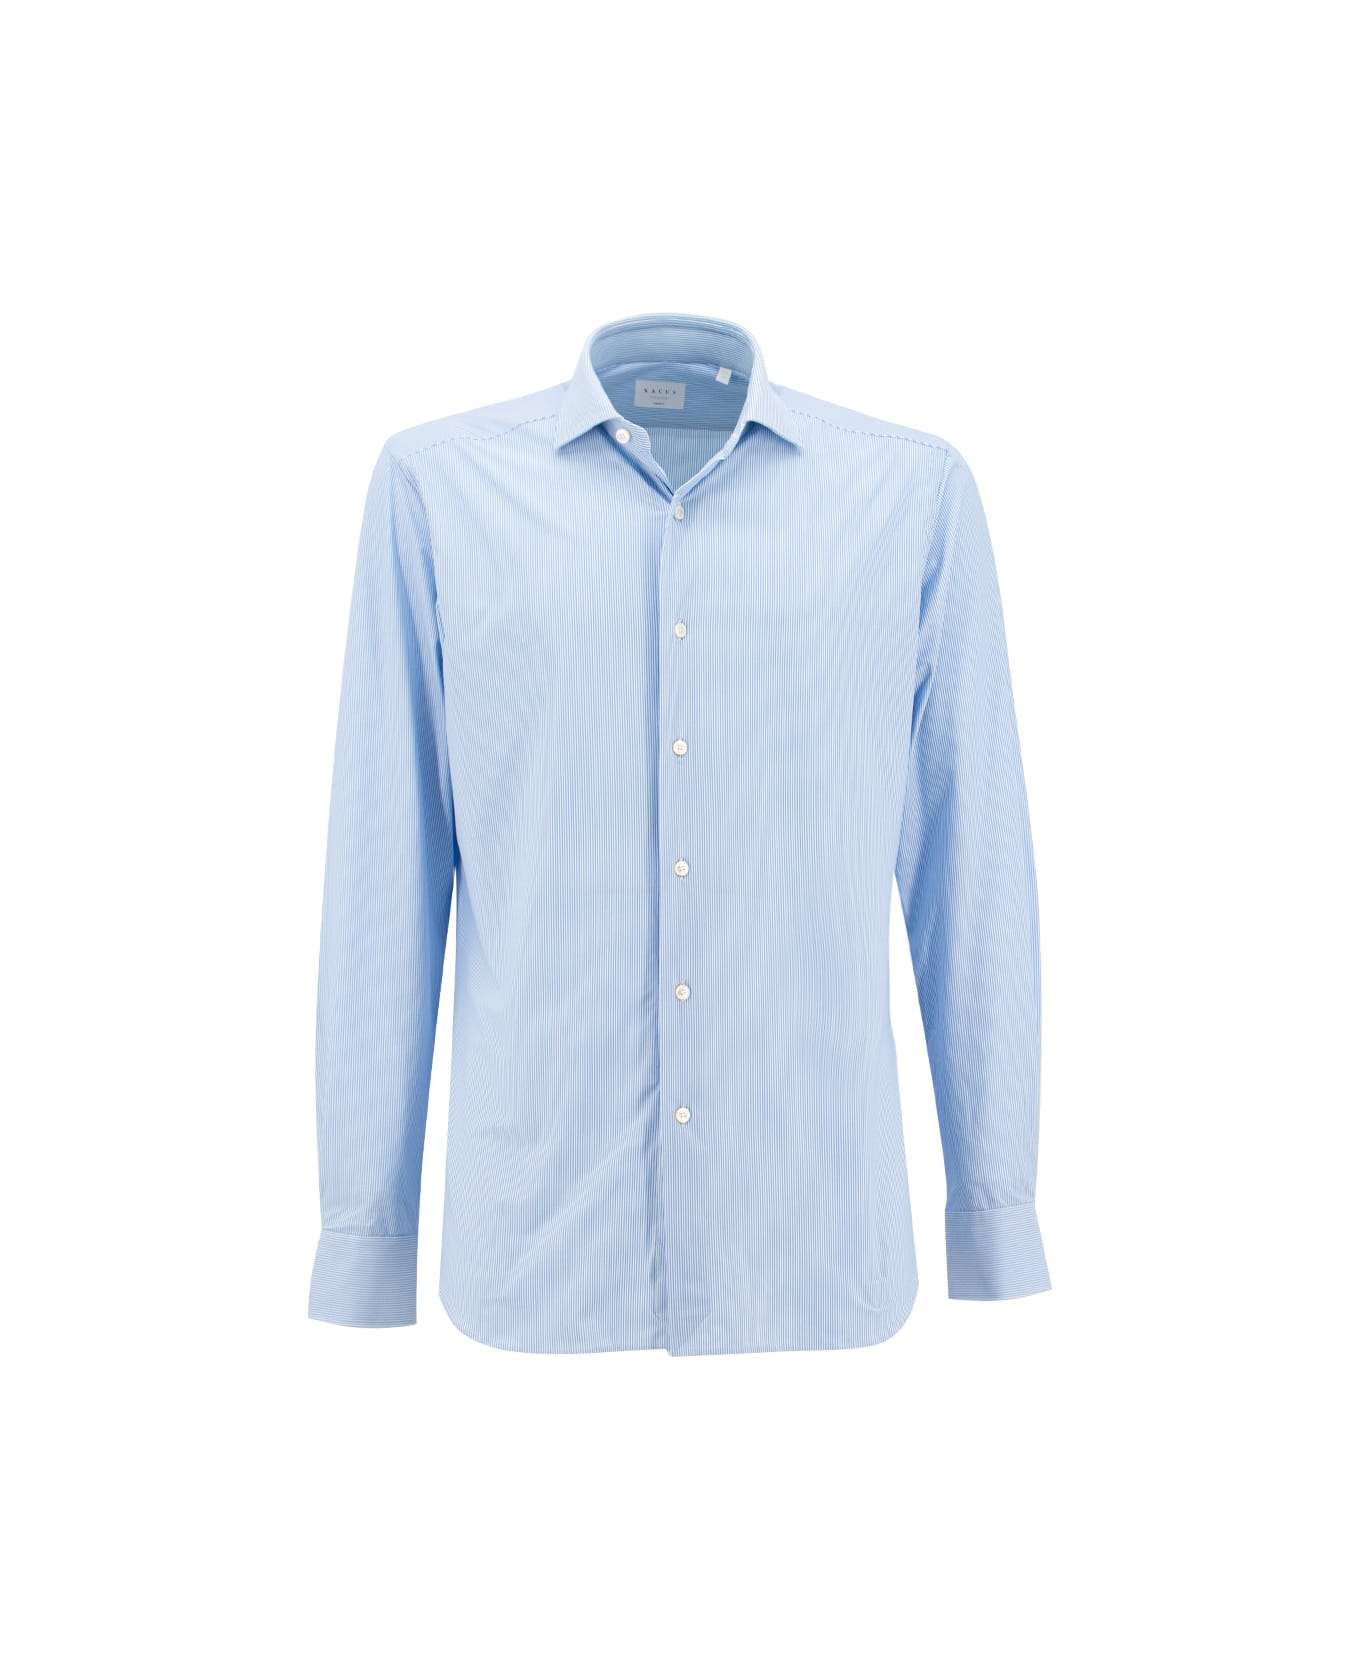 Xacus Shirt - STRIPE BLUE  WHITE シャツ